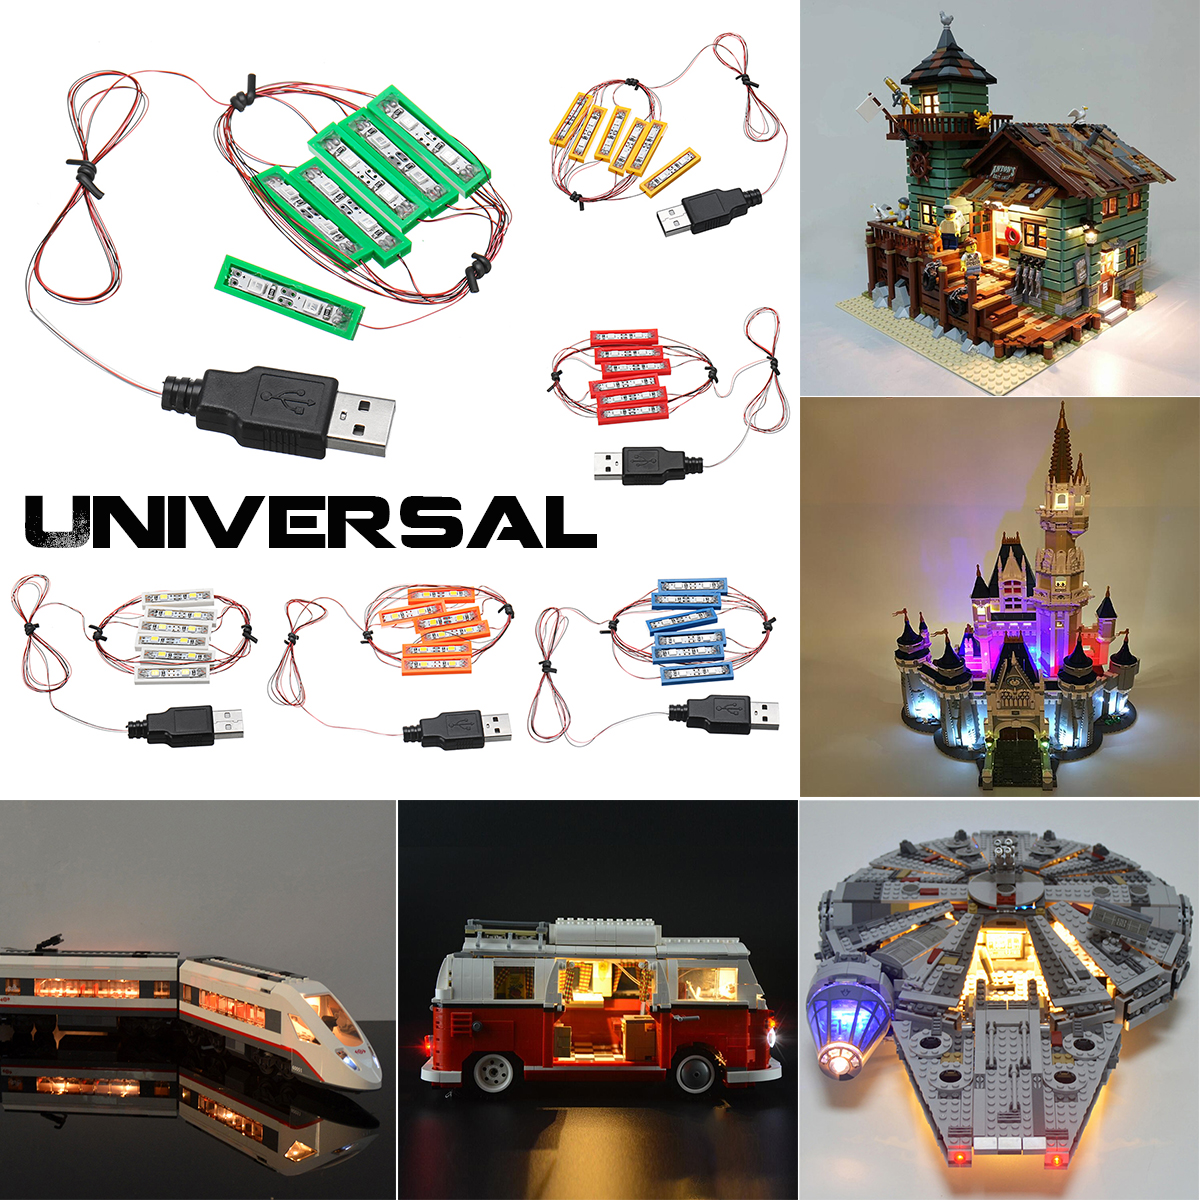 Universal-DIY-LED-Light-Brick-Kit-For-Lego-MOC-Toys-USB-Port-Blocks-Accessories-Decor-1444426-7